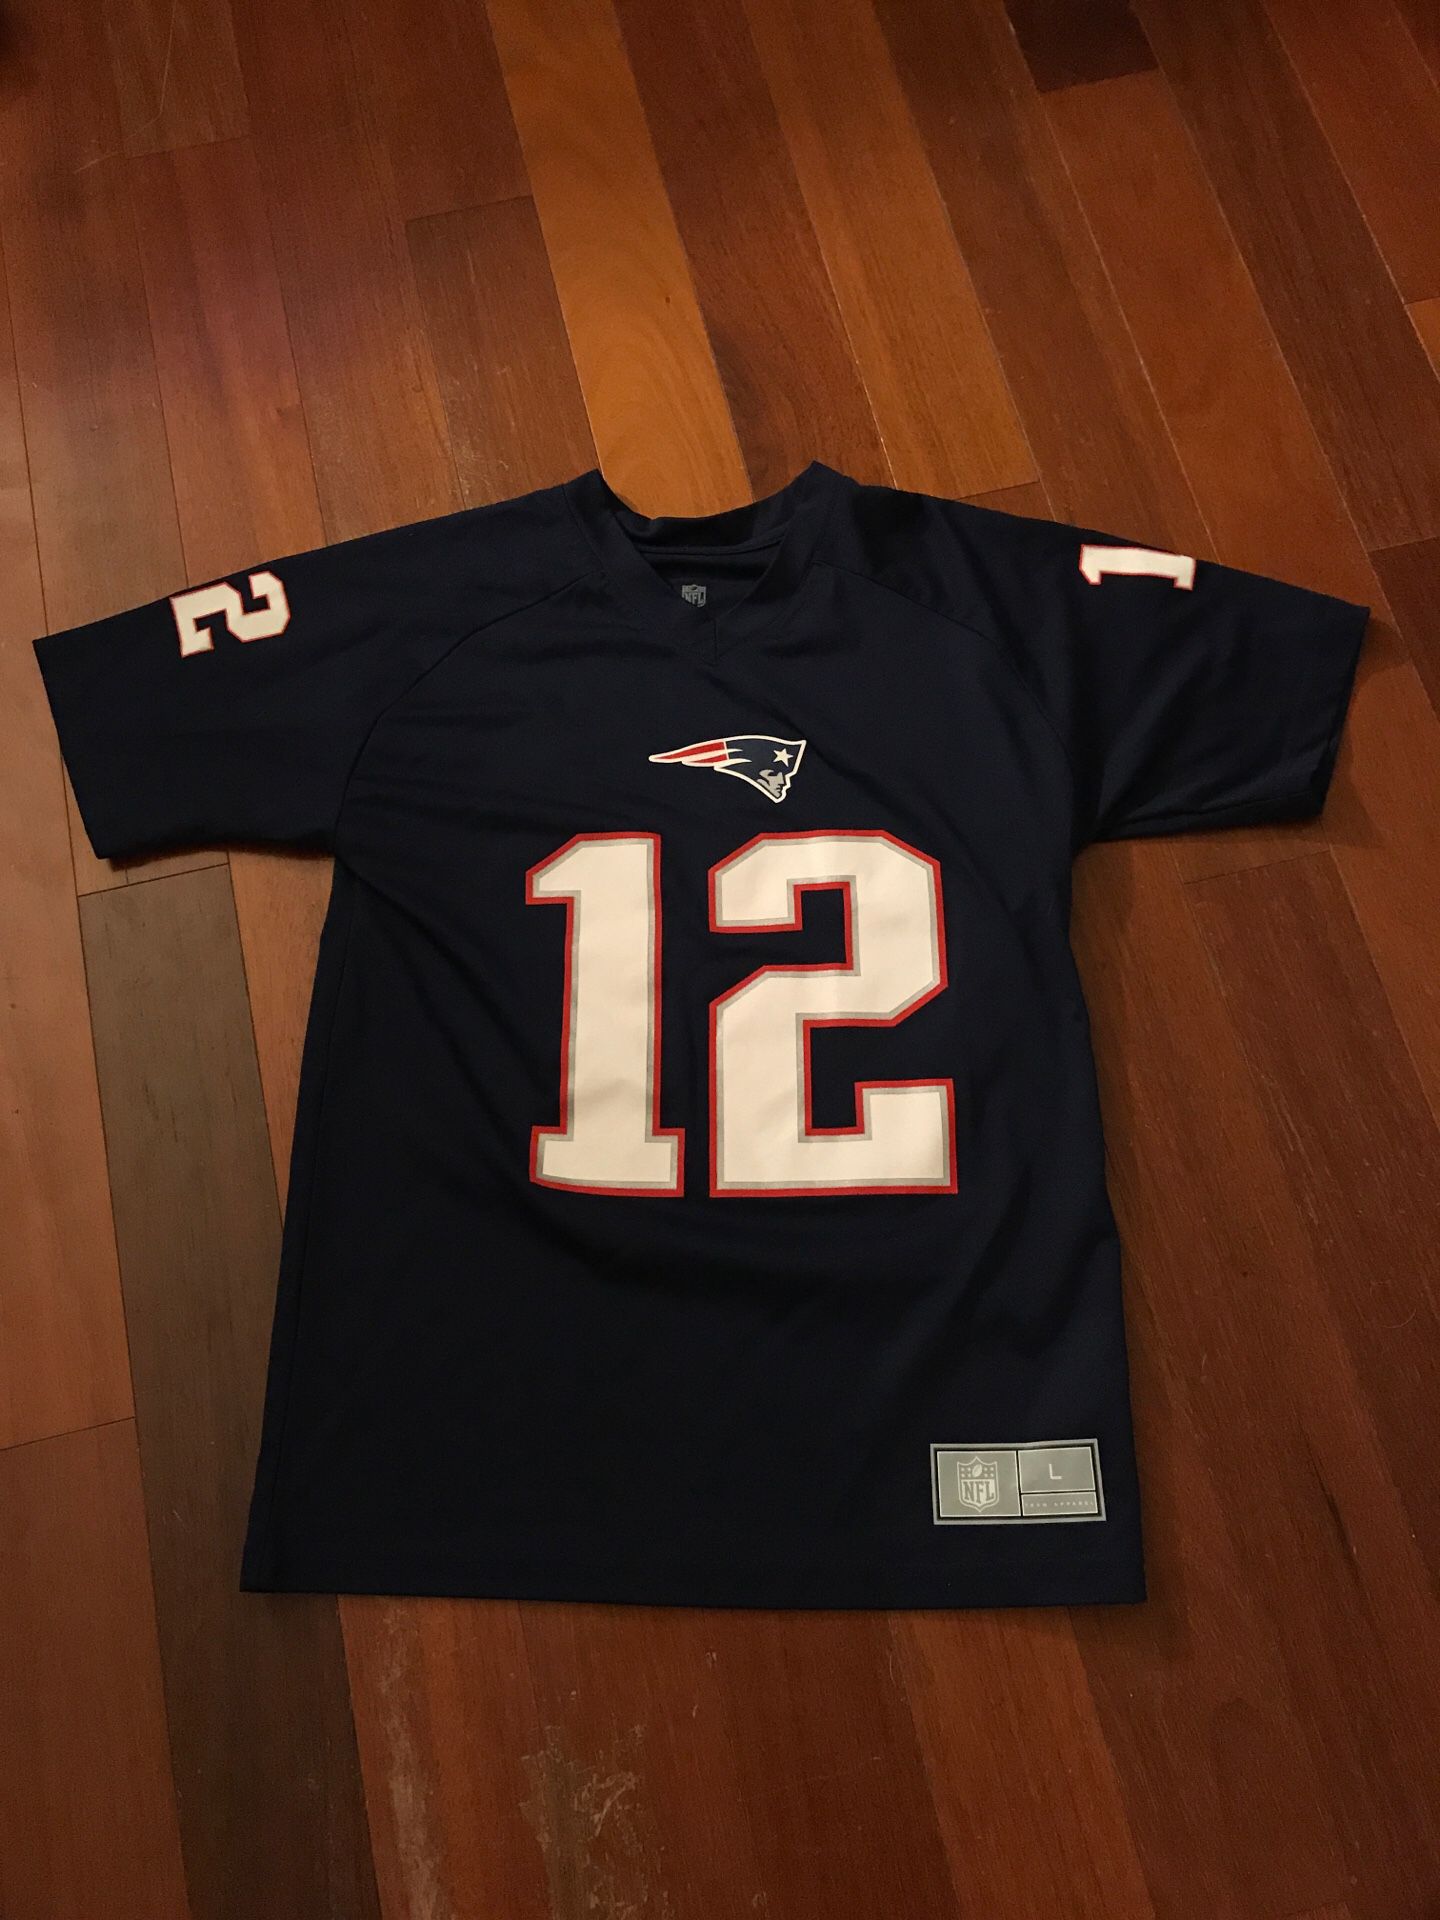 Tom Brady New England Patriots jersey